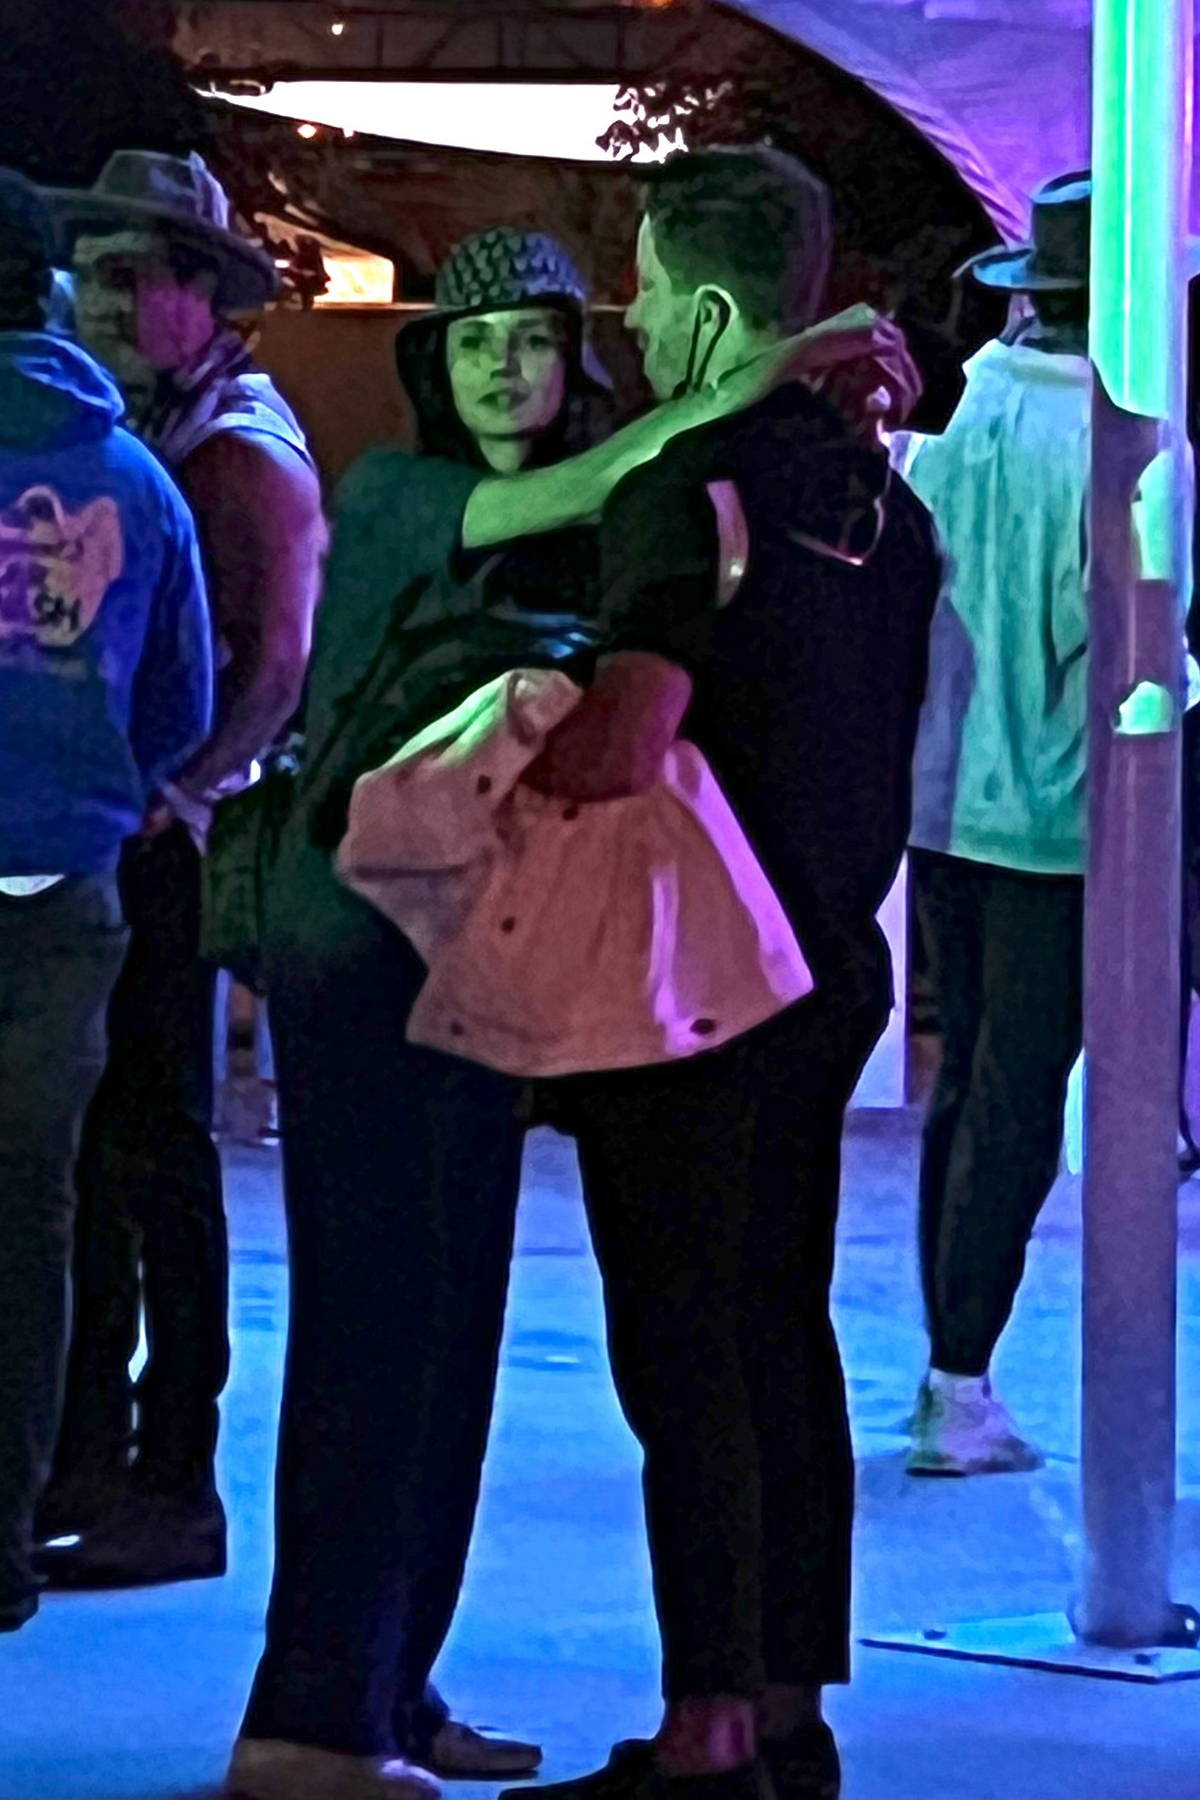 21metgala on X: Shaun White and Nina Dobrev arrive at Coachella